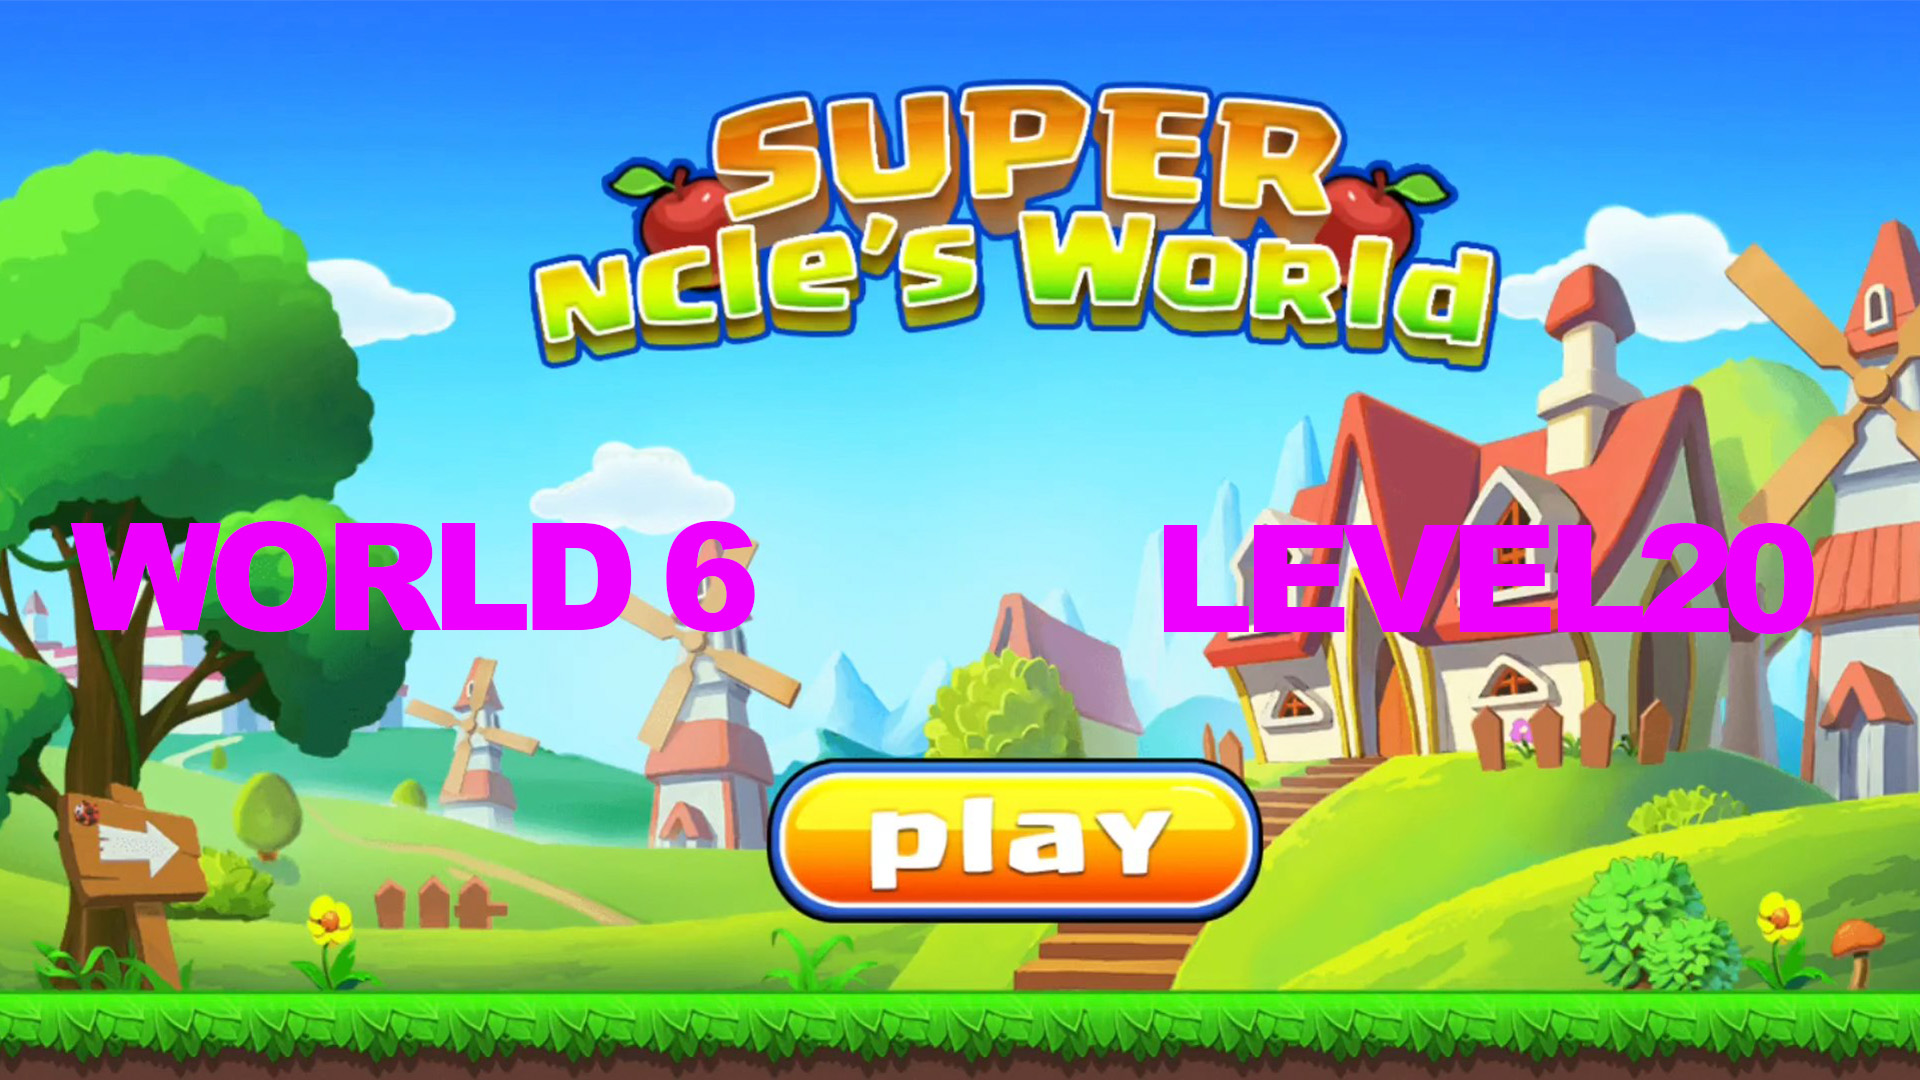 Super ncle's  World 6. Level 20.